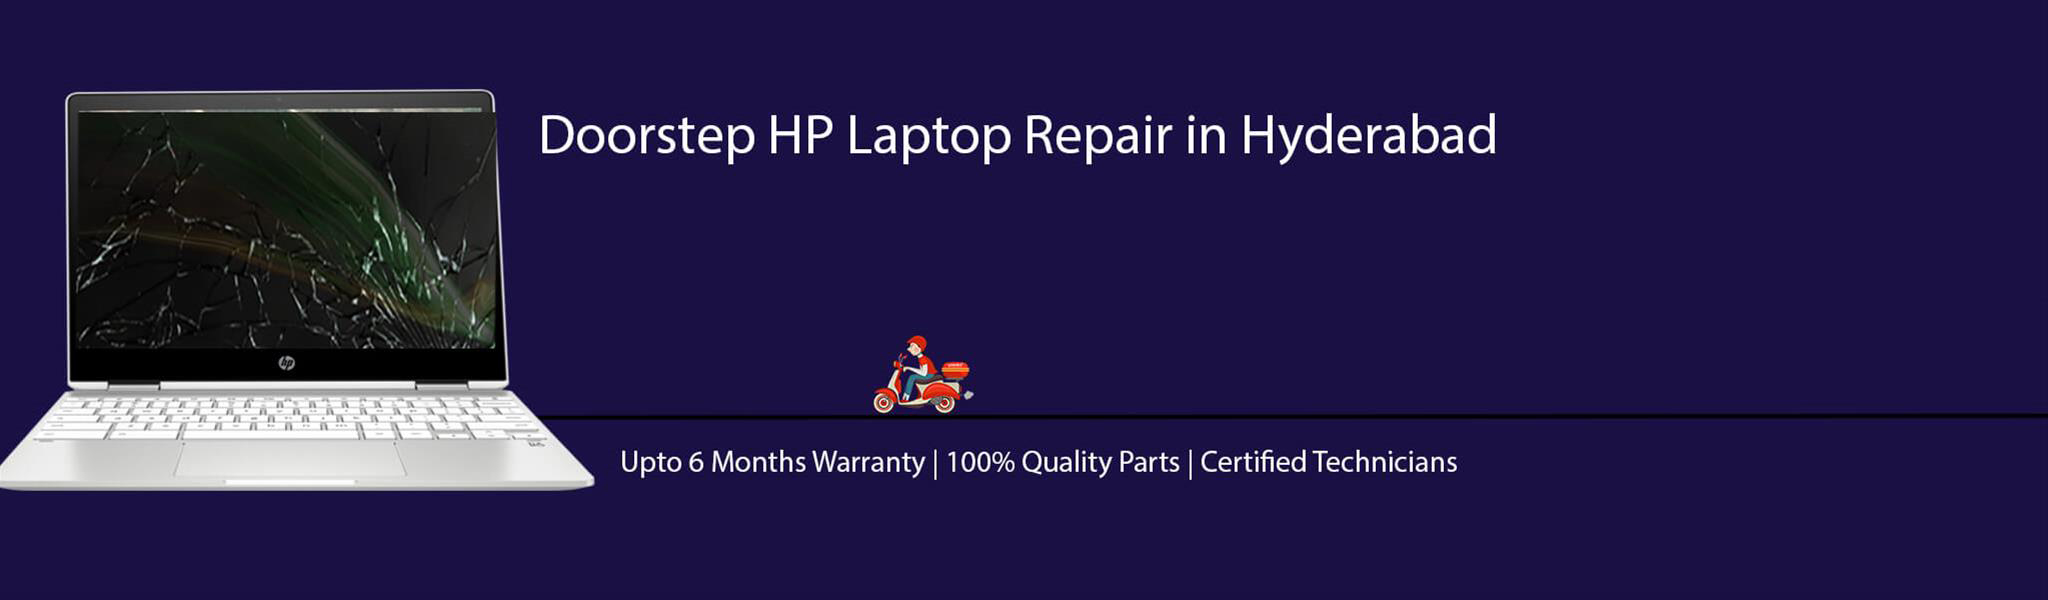 HP-laptop-banner-hyderabad.jpg